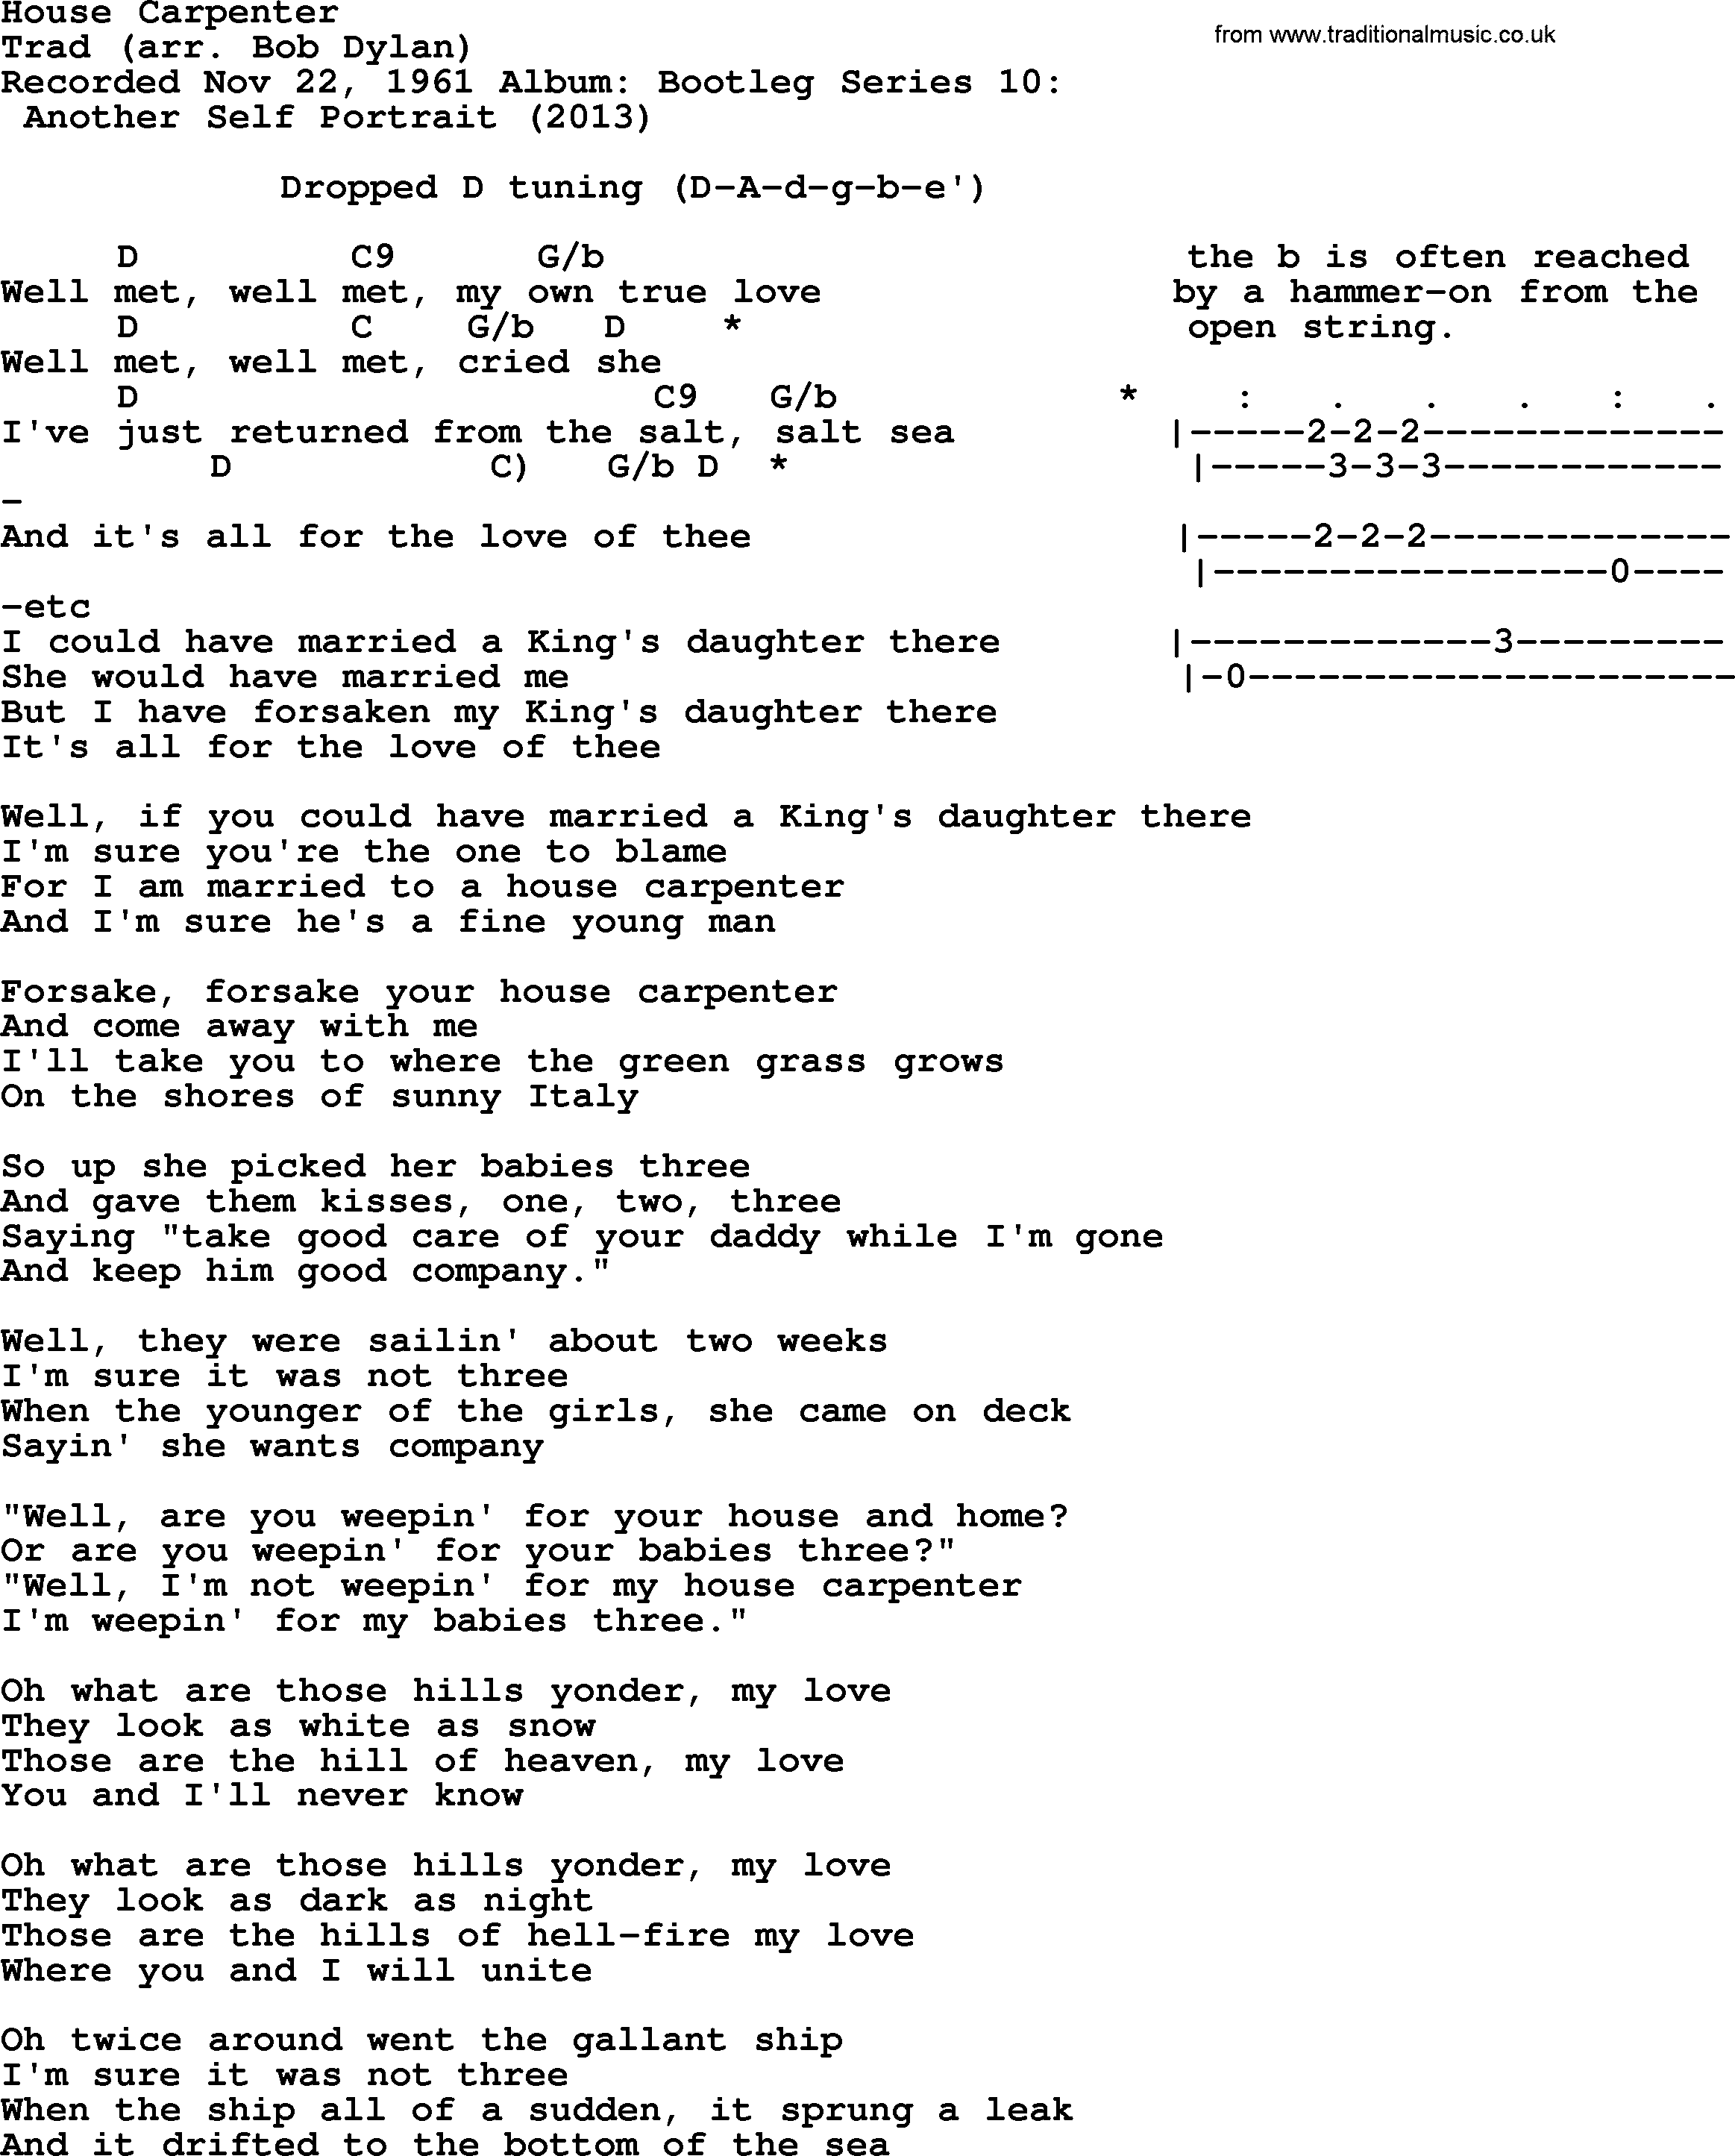 Bob Dylan song, lyrics with chords - House Carpenter